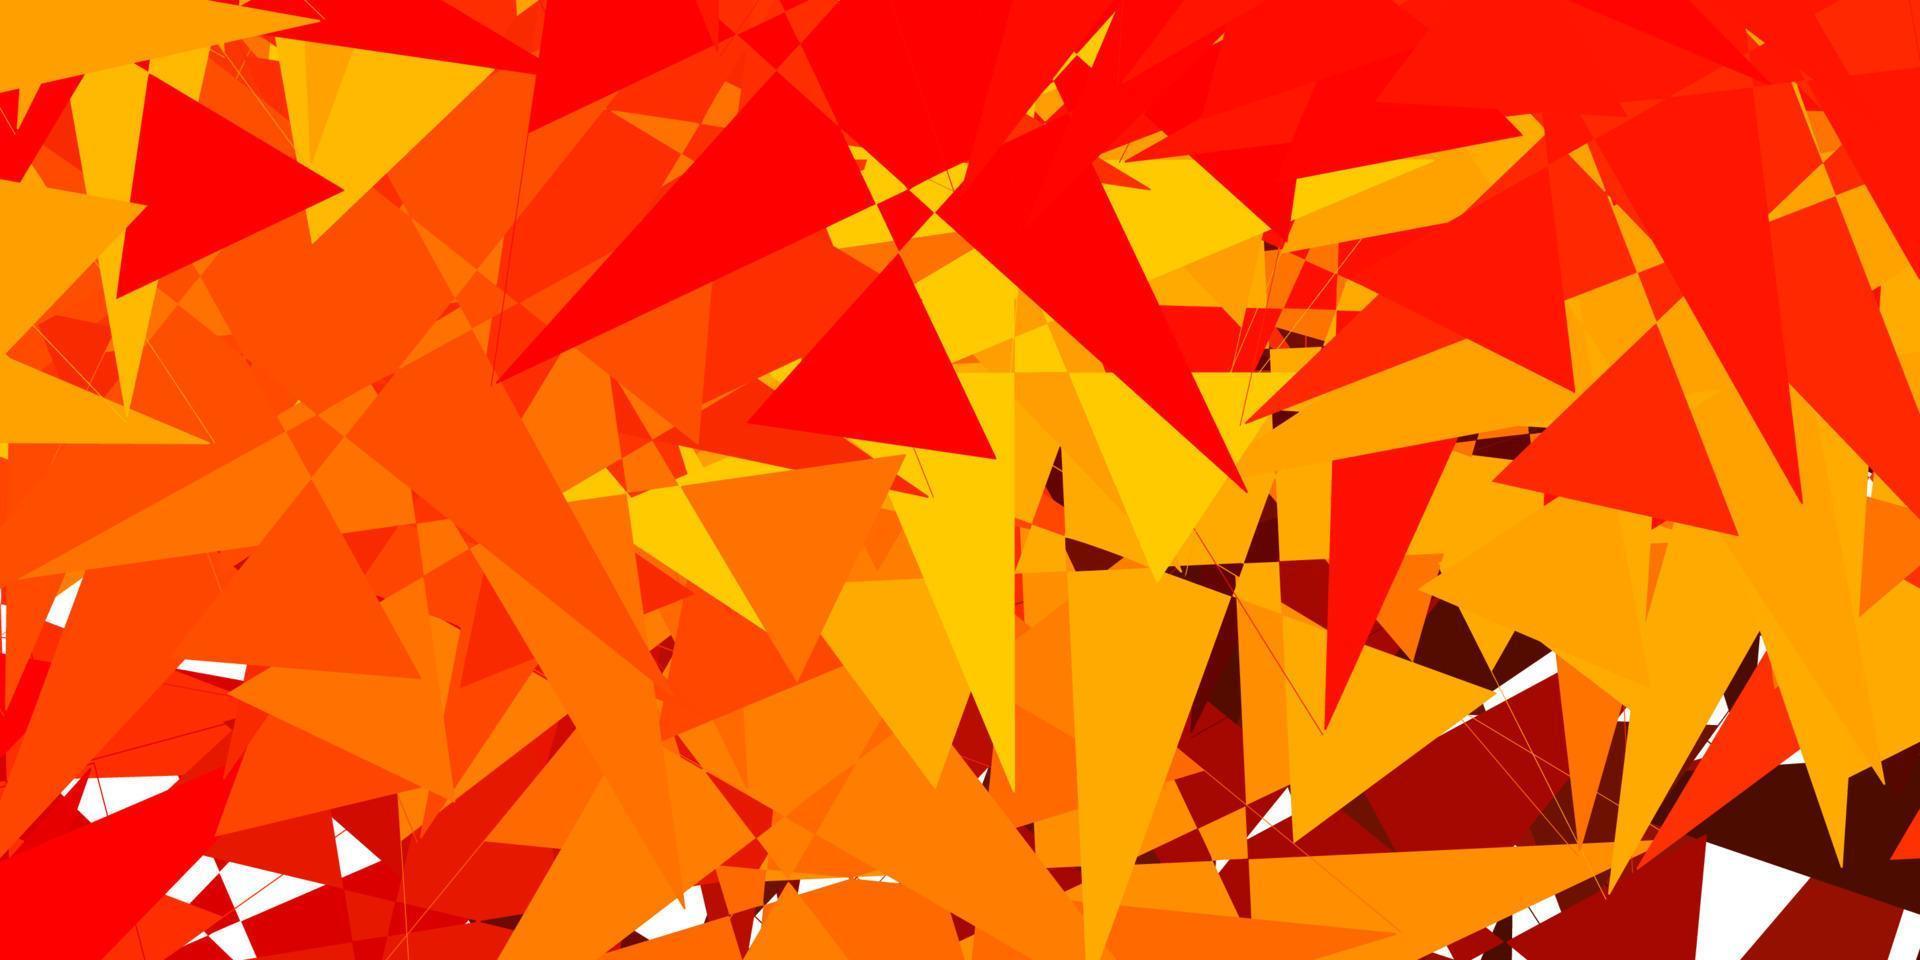 Light Orange vector texture with memphis shapes.